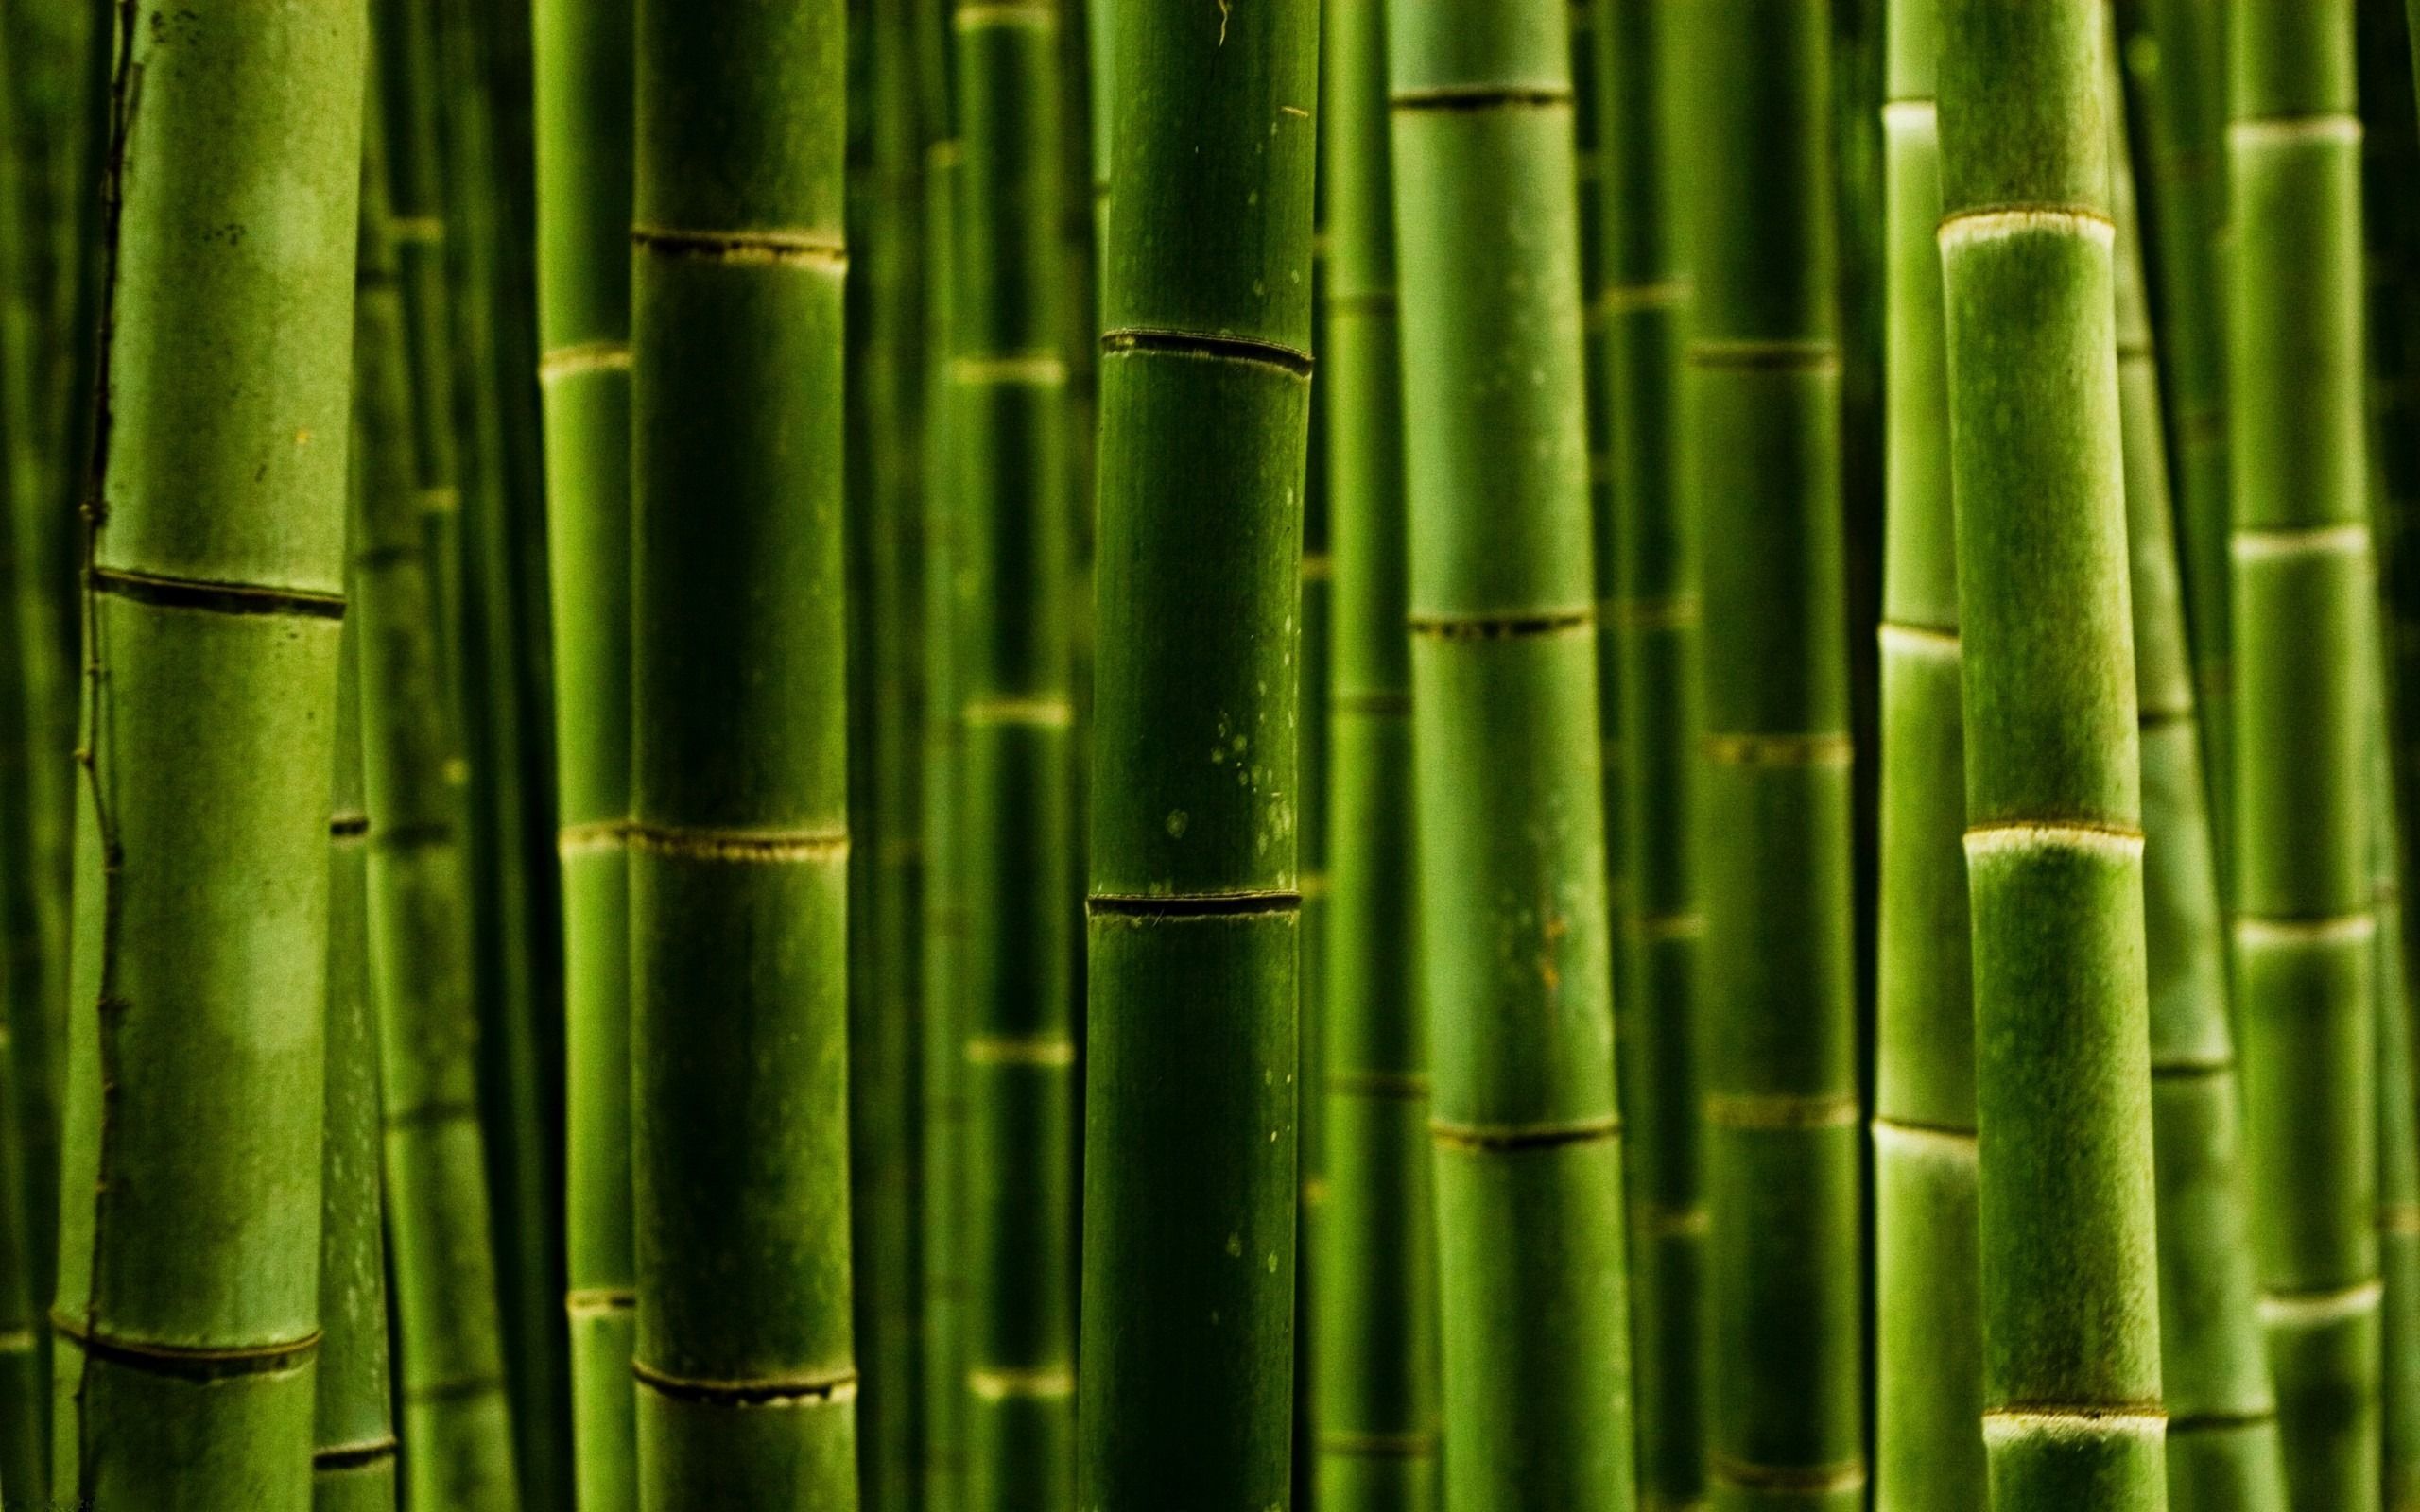 oboi-pod-bambuk.jpg (2560×1600) | Bamboo | Pinterest